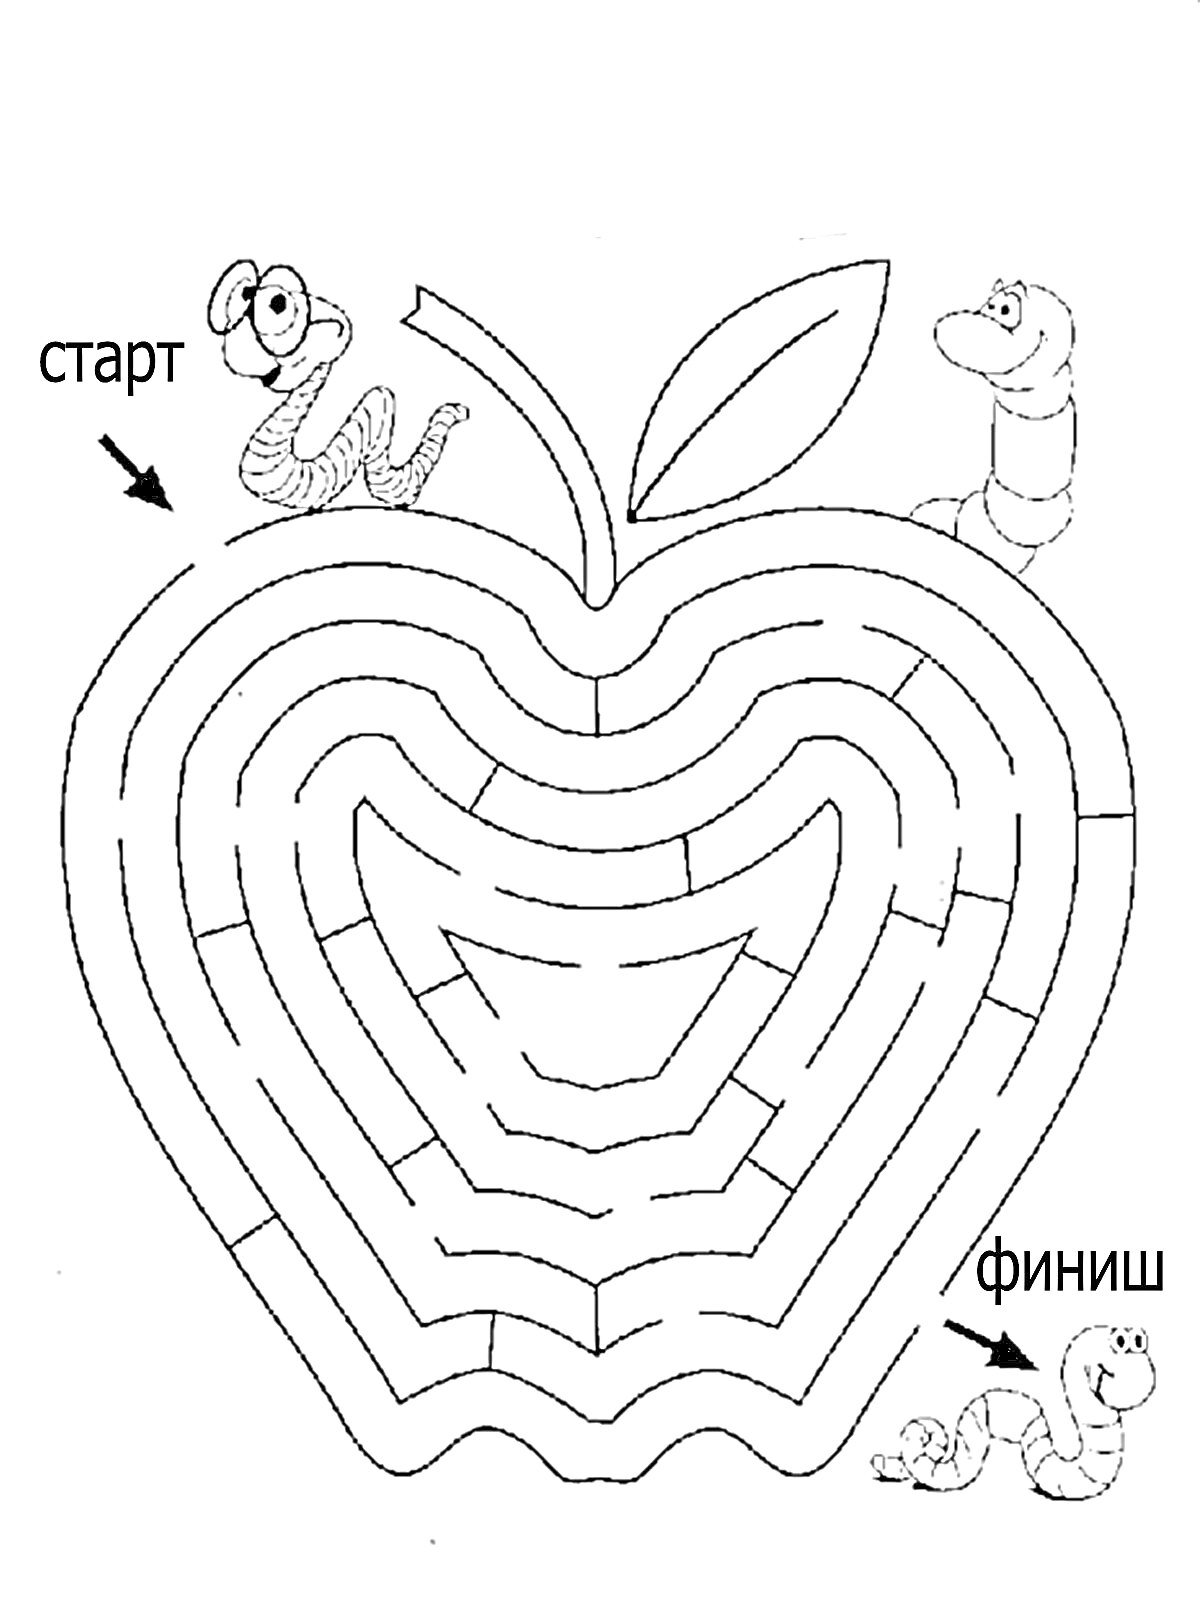 Раскраска Лабиринт в форме яблока с двумя червяками, старт и финиш